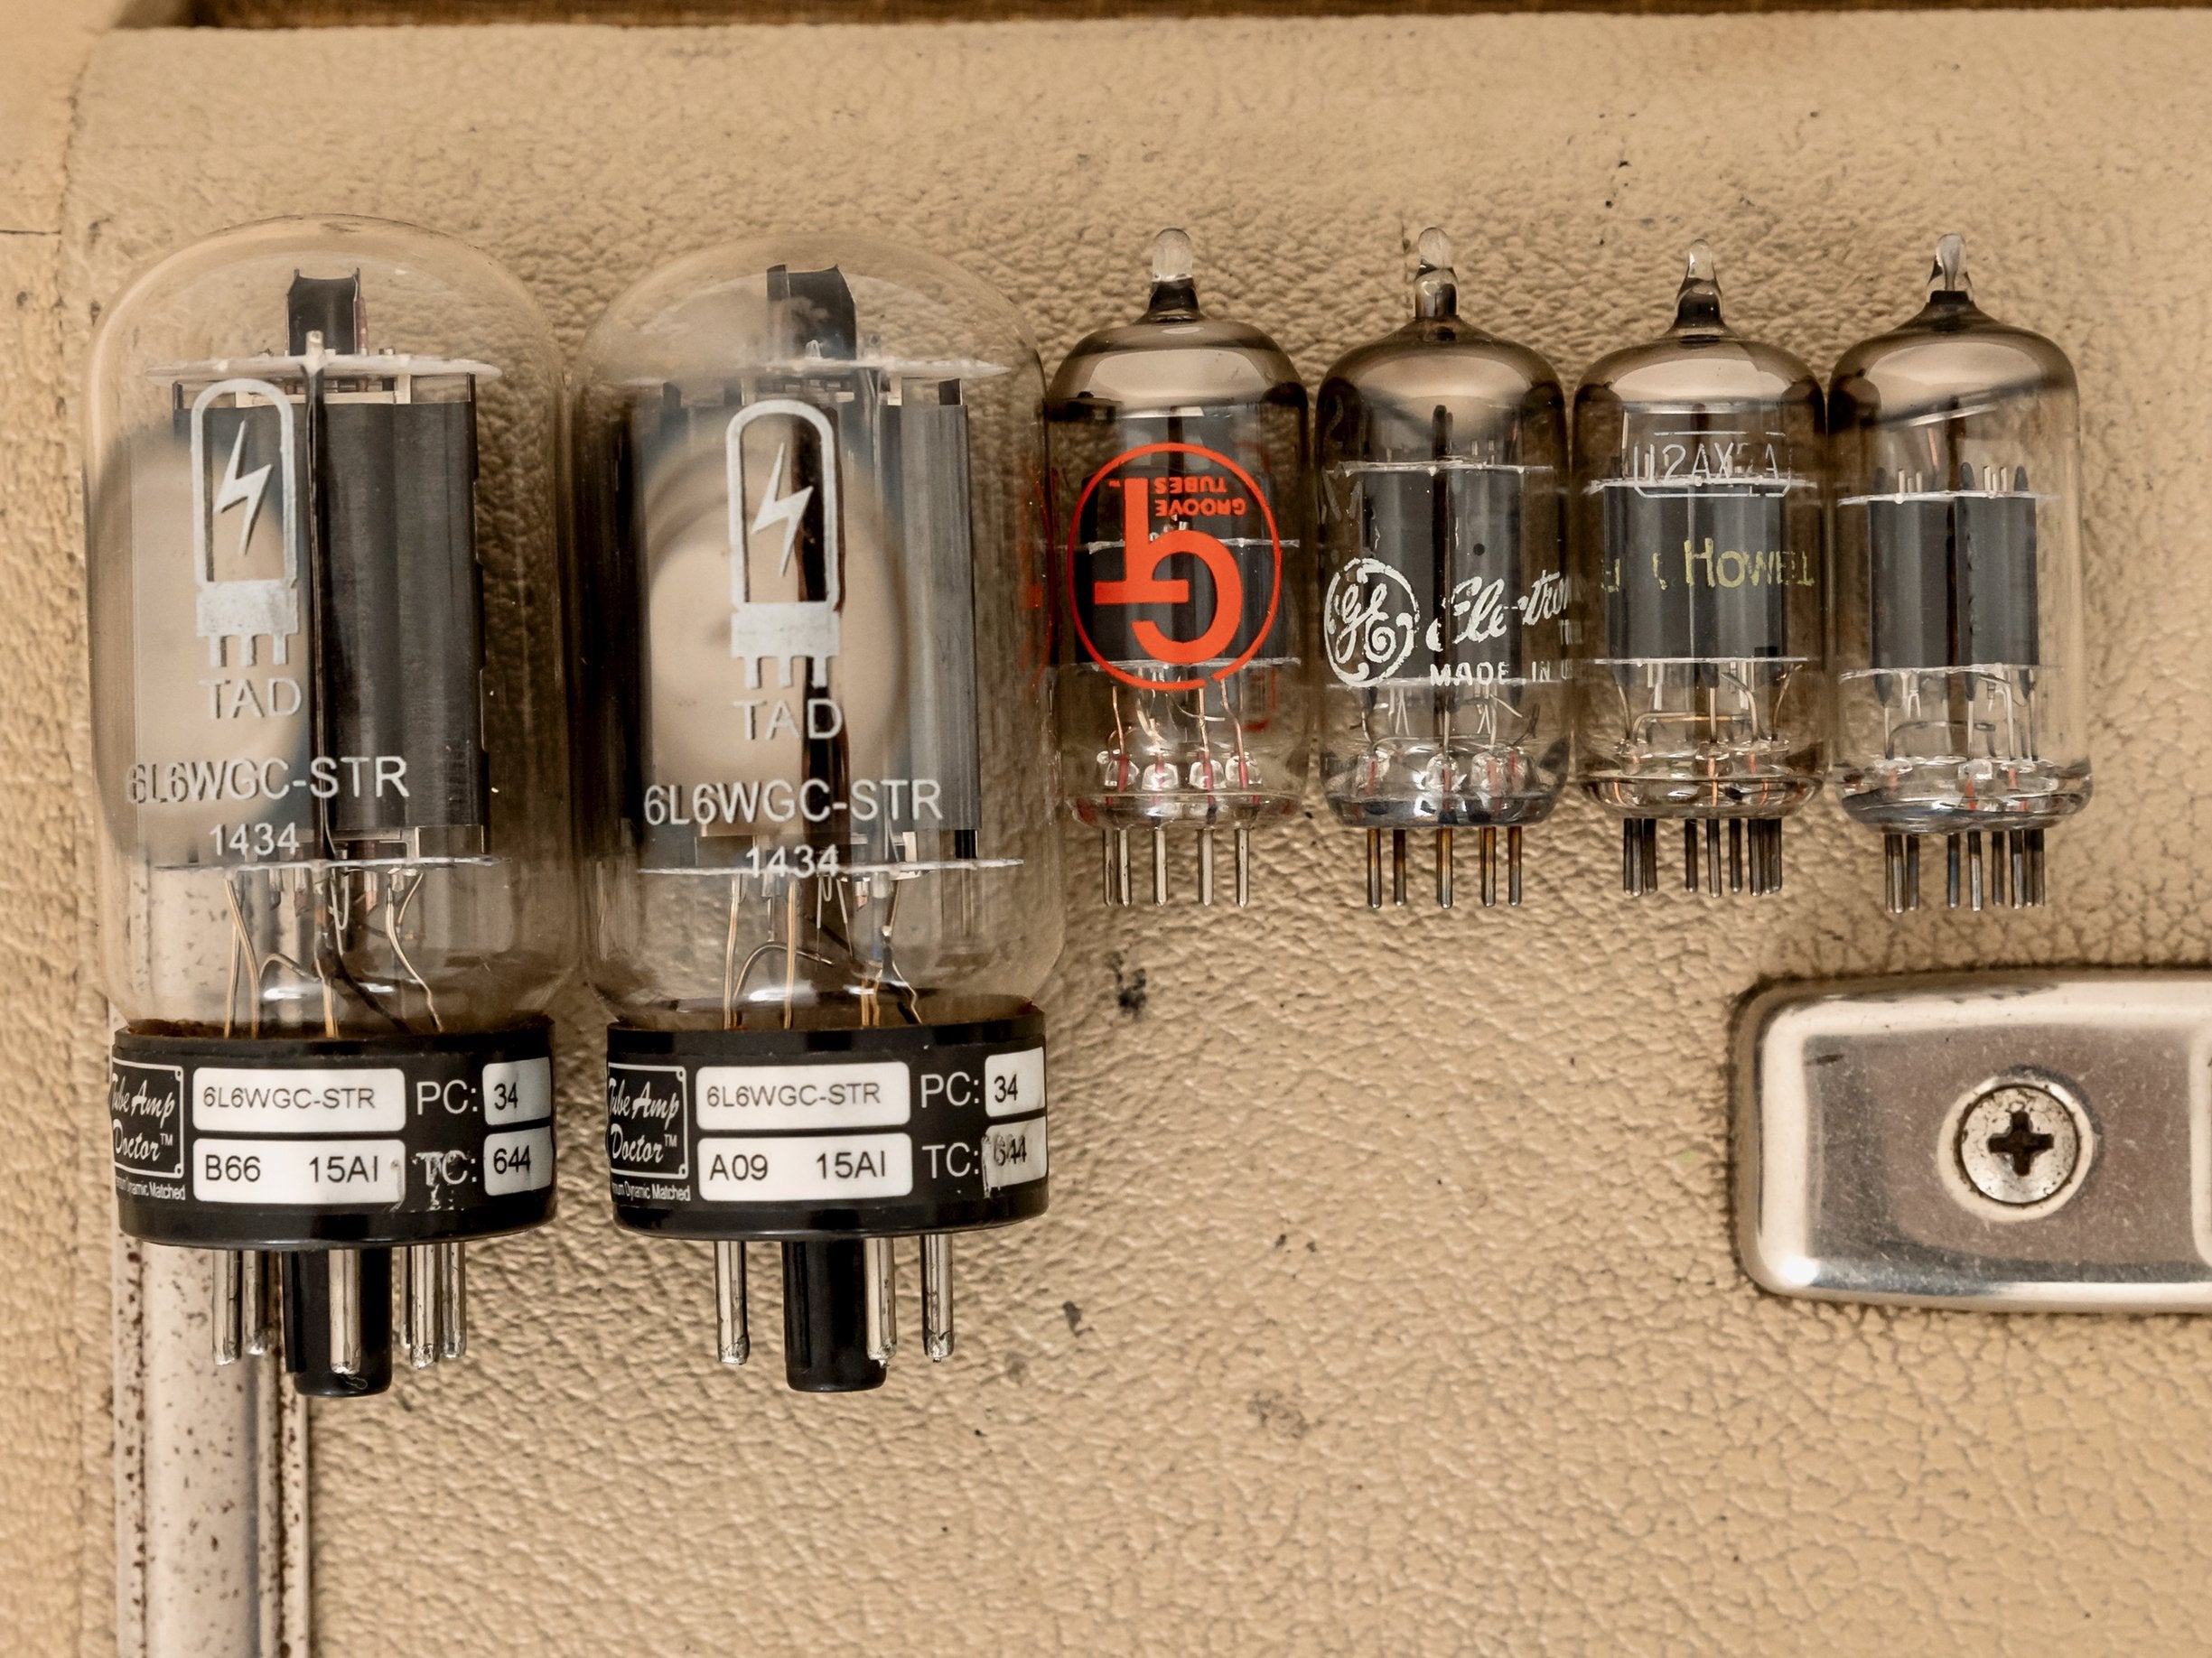 1964 Fender Bassman Black Panel Blonde Pre-CBS Tube Amp Head, AA864 Circuit, Rare Variant